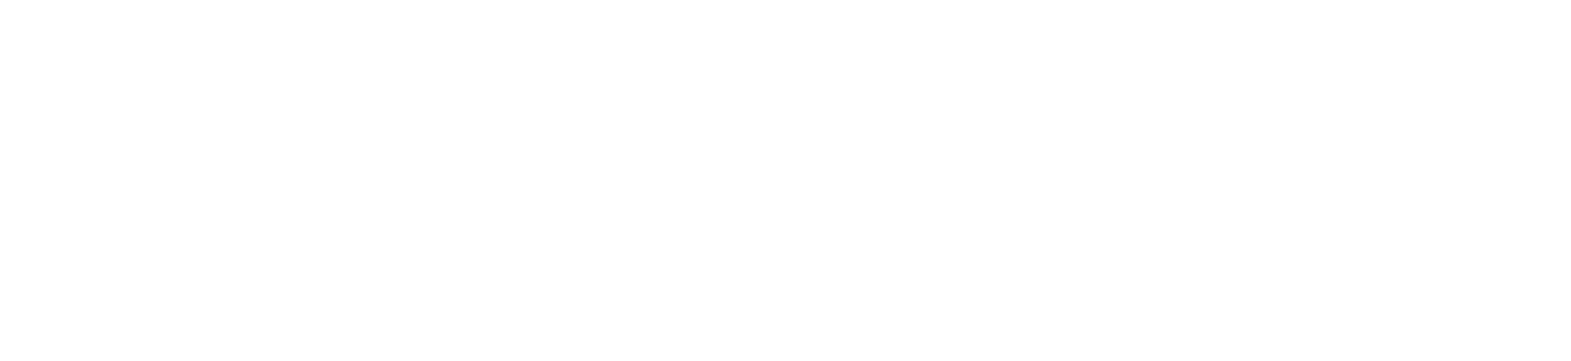 Logo do its Brasil